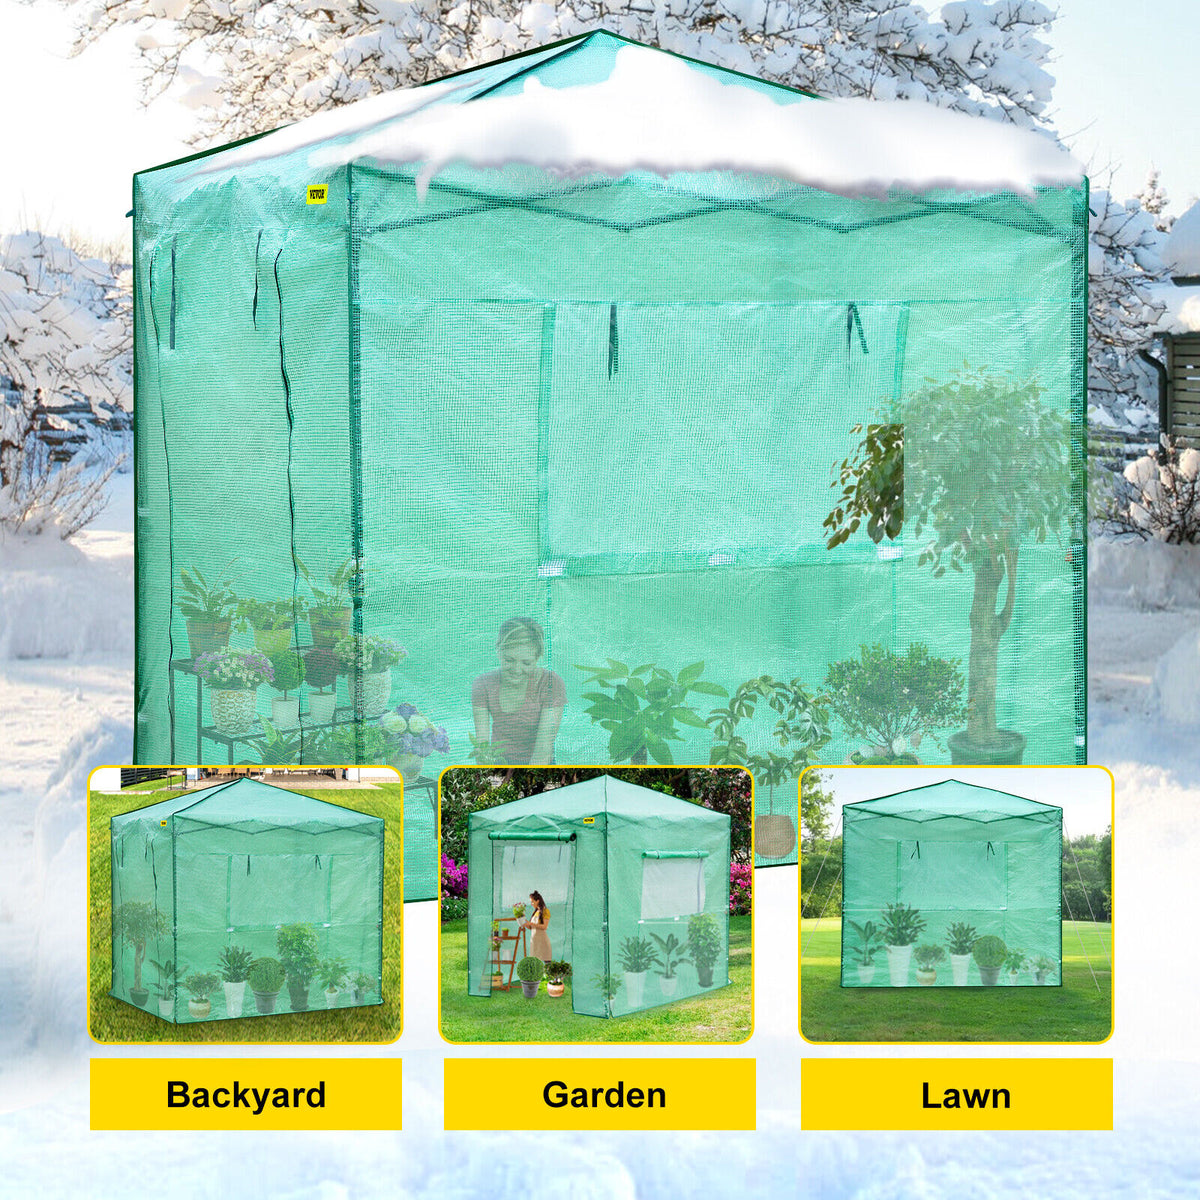 Portable Walk-in Greenhouse 8' x 6' x 8' Plant Garden